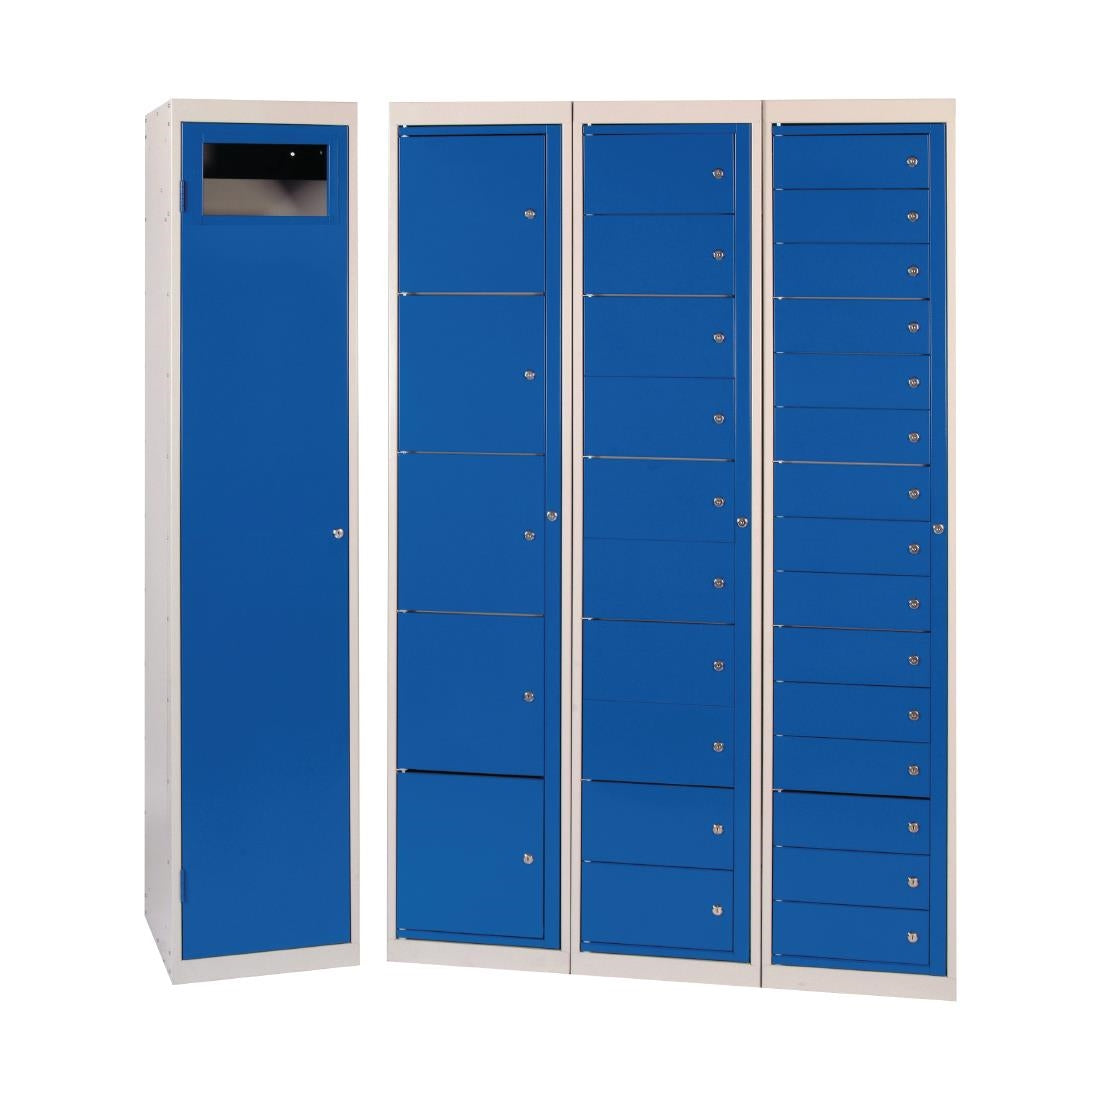 Garment 10 Door Dispensing Locker Flat Top JD Catering Equipment Solutions Ltd